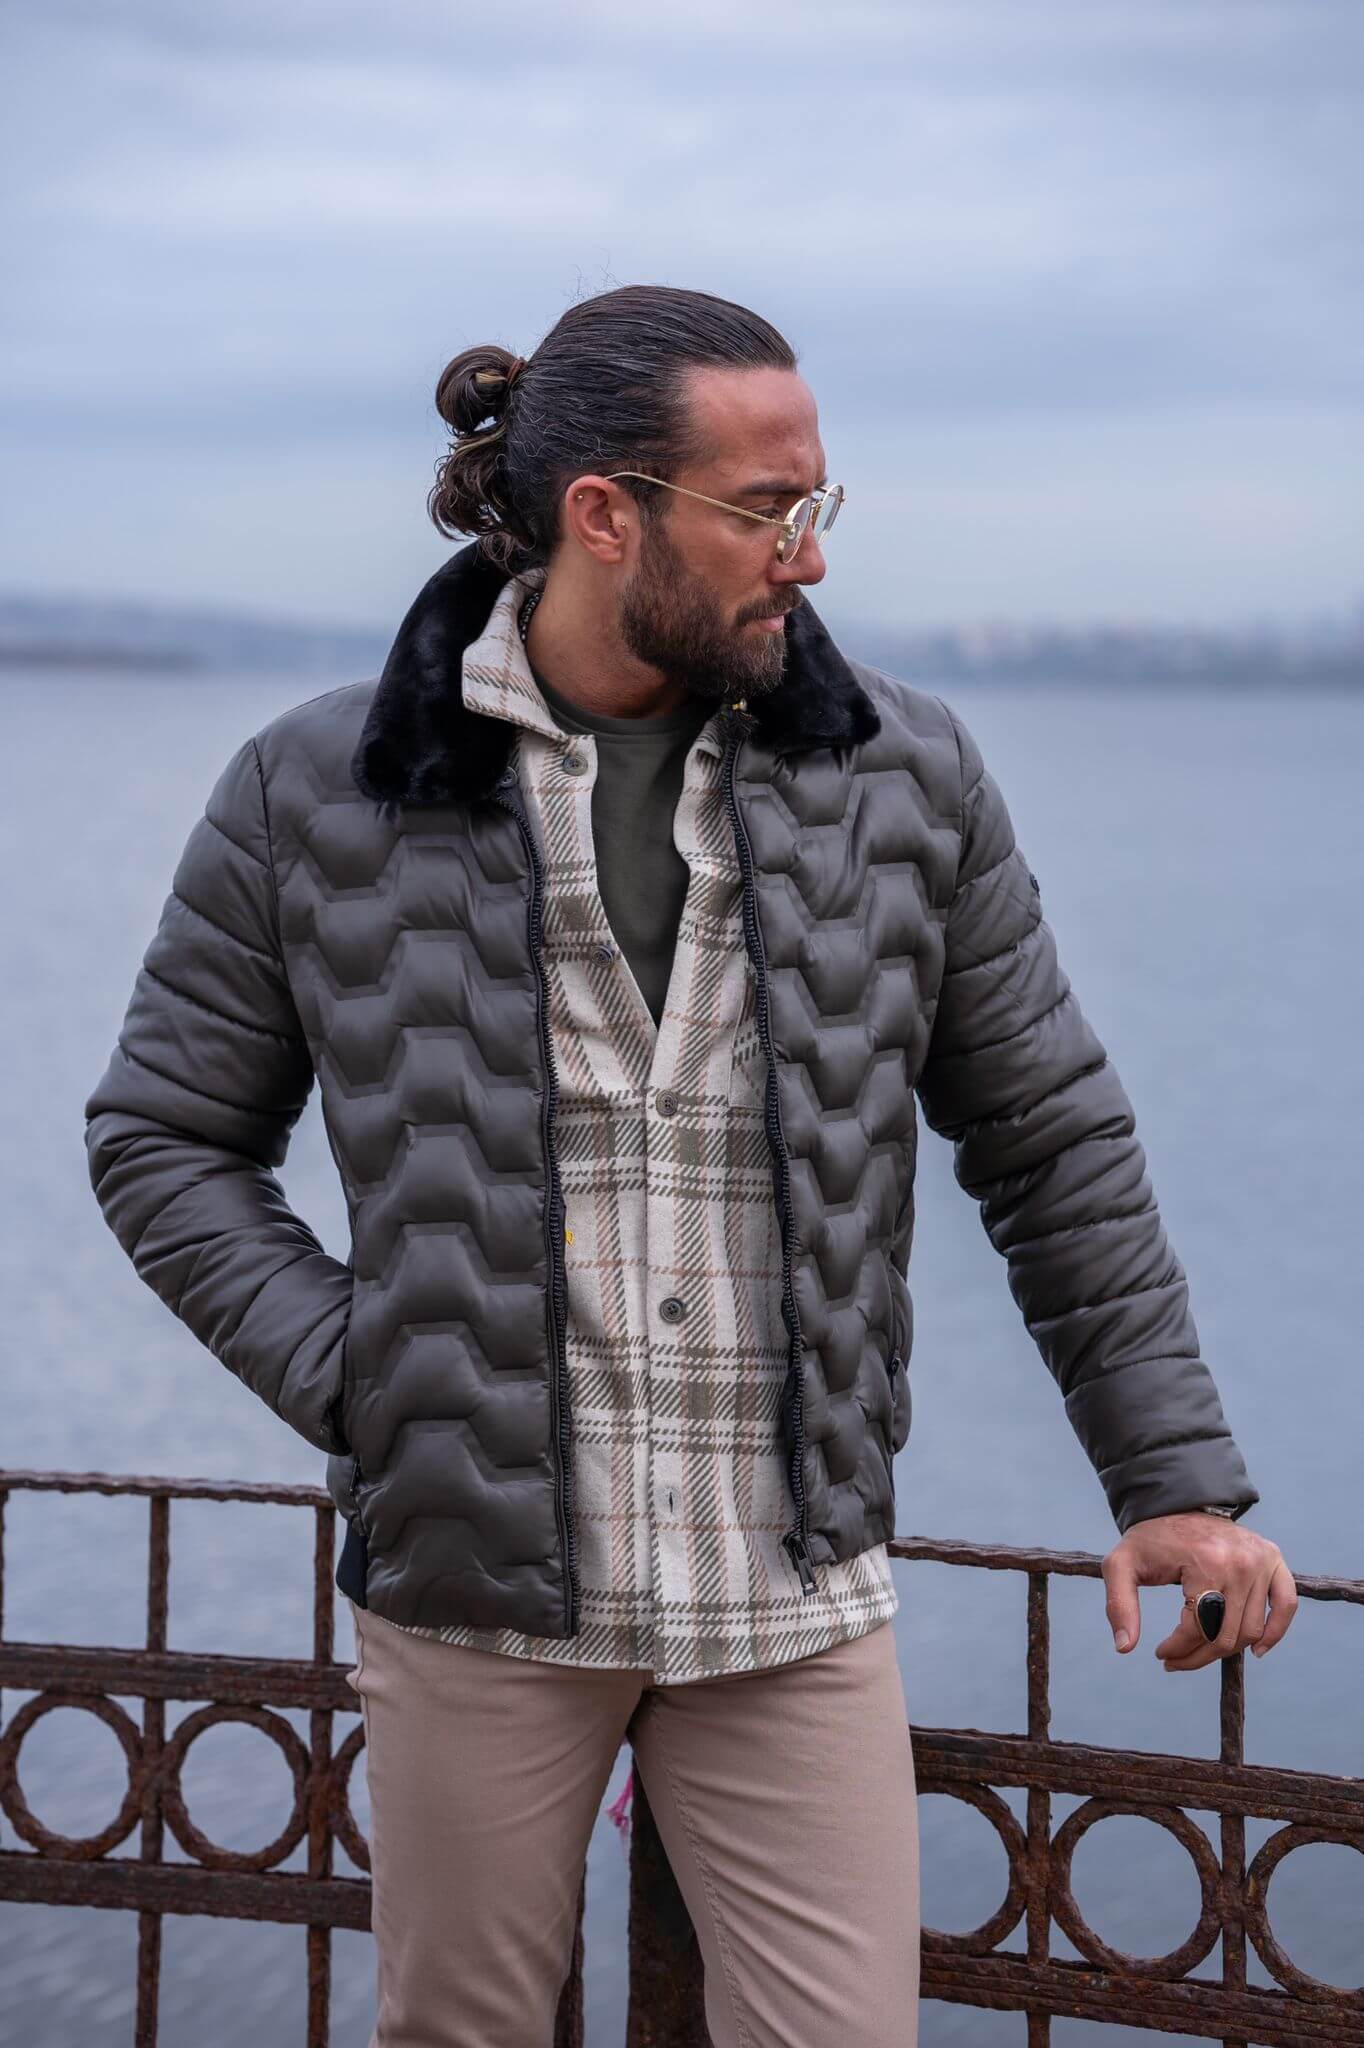 Modern masculinity embodied: our male model rocks the khaki bomber jacket.